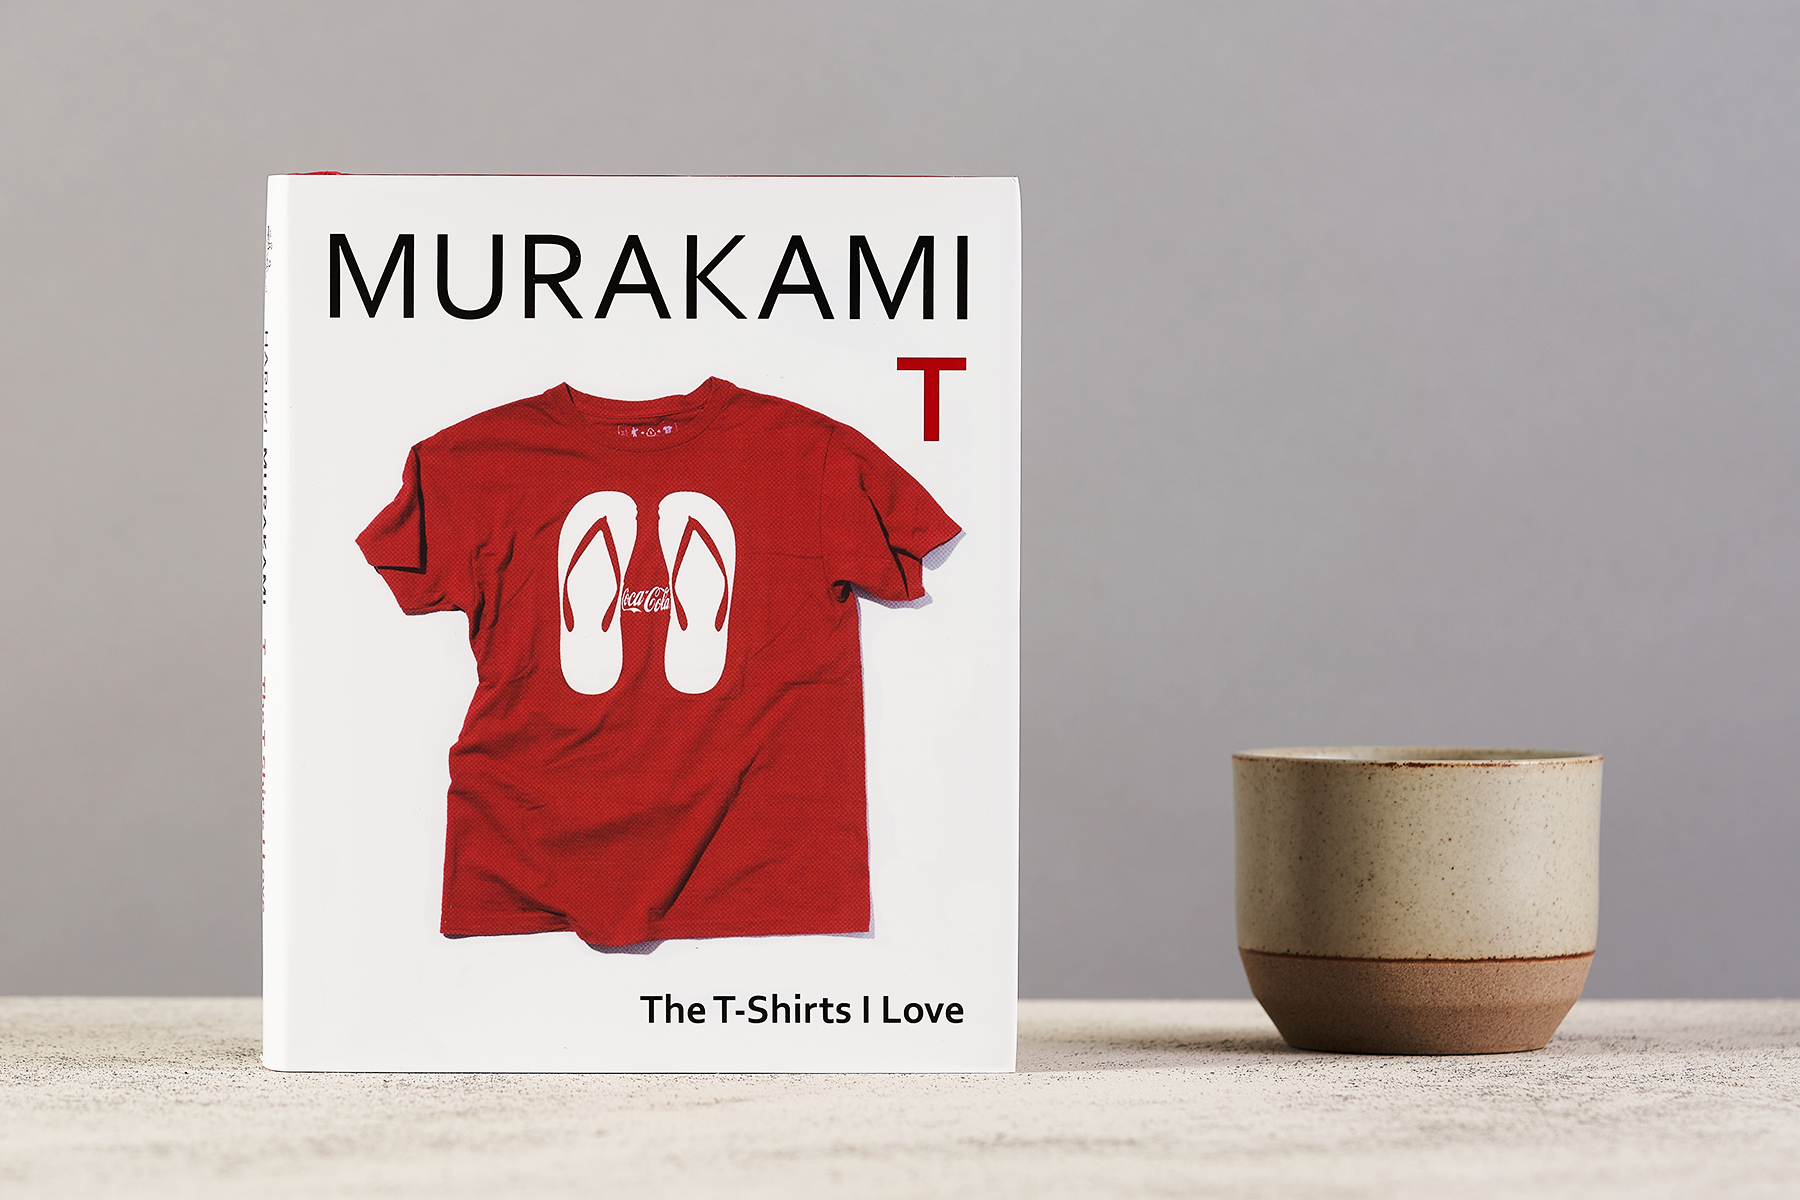 A copy of Haruki Murakami's 'Murakami T' book, photographed next to a ceramic bowl.